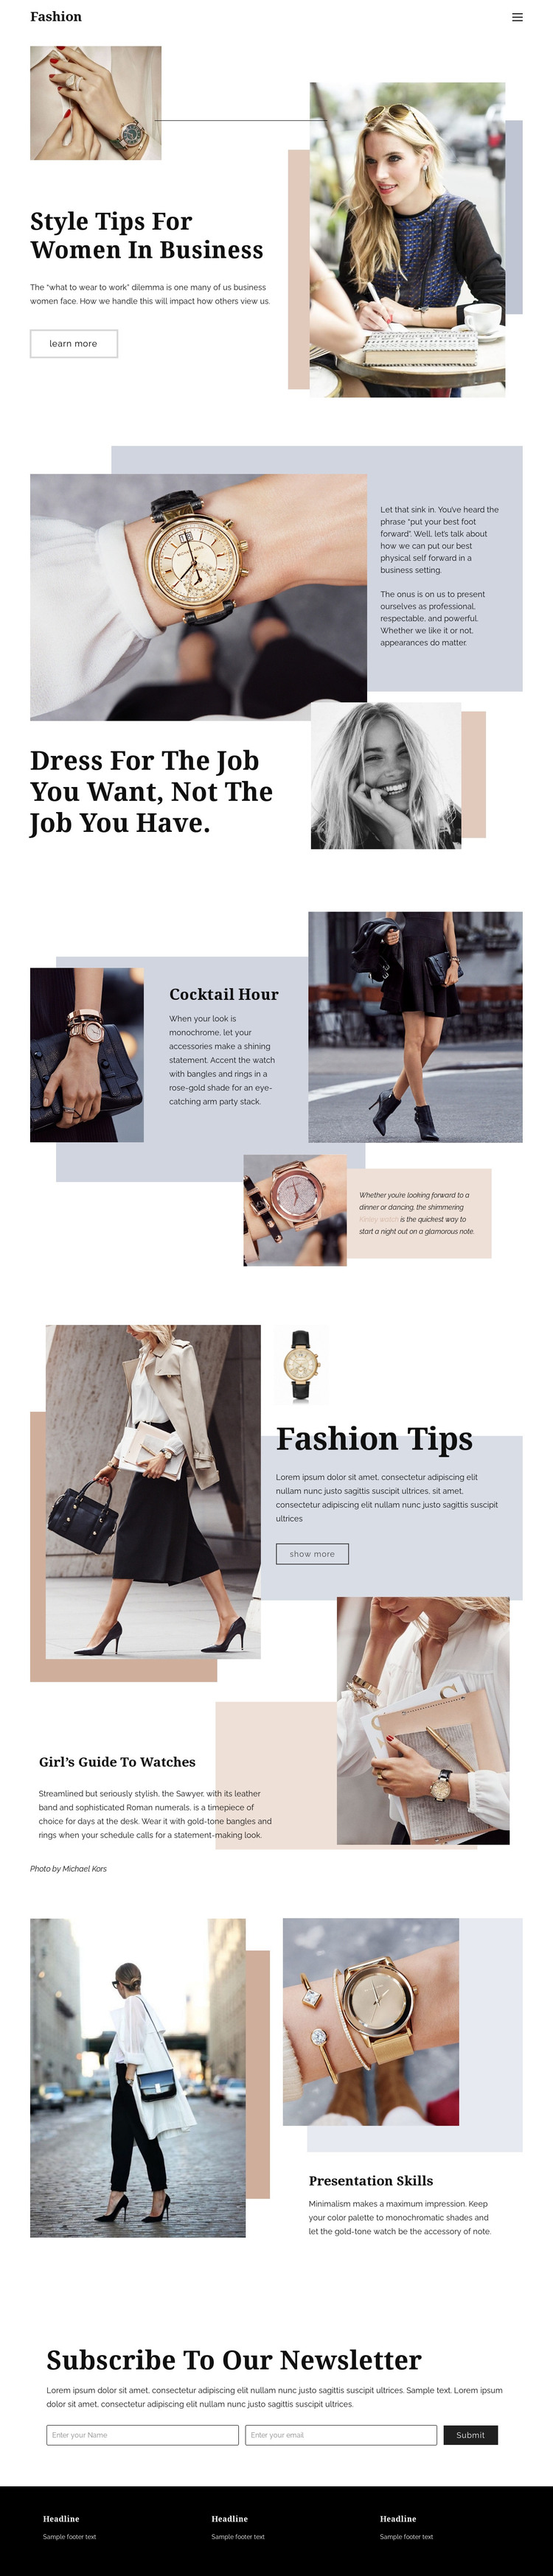 Fashion tips Homepage Design